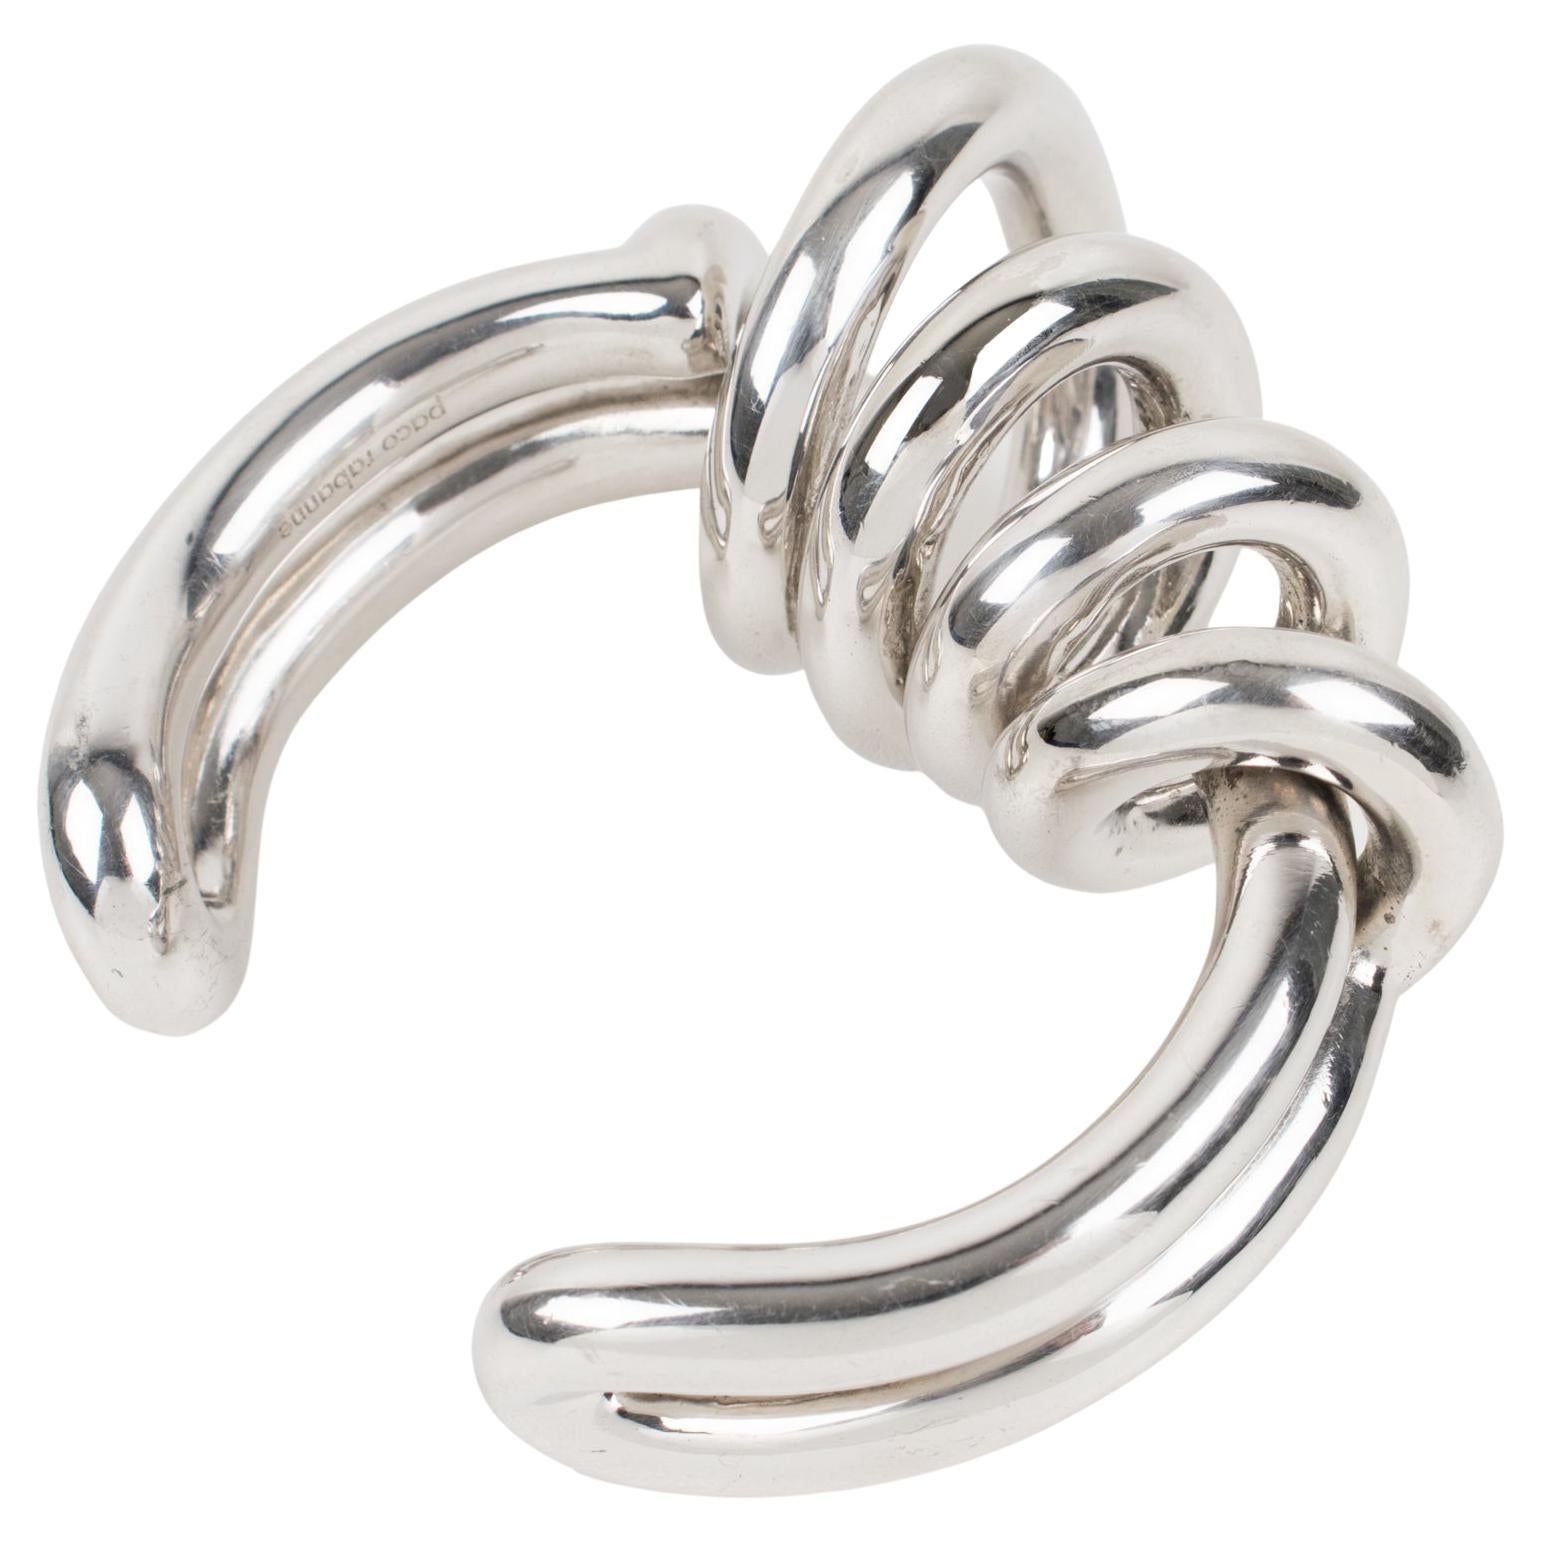 Paco Rabanne Futuristic Chrome Metal Cuff Bracelet Bangle Runway Fall 2014 For Sale